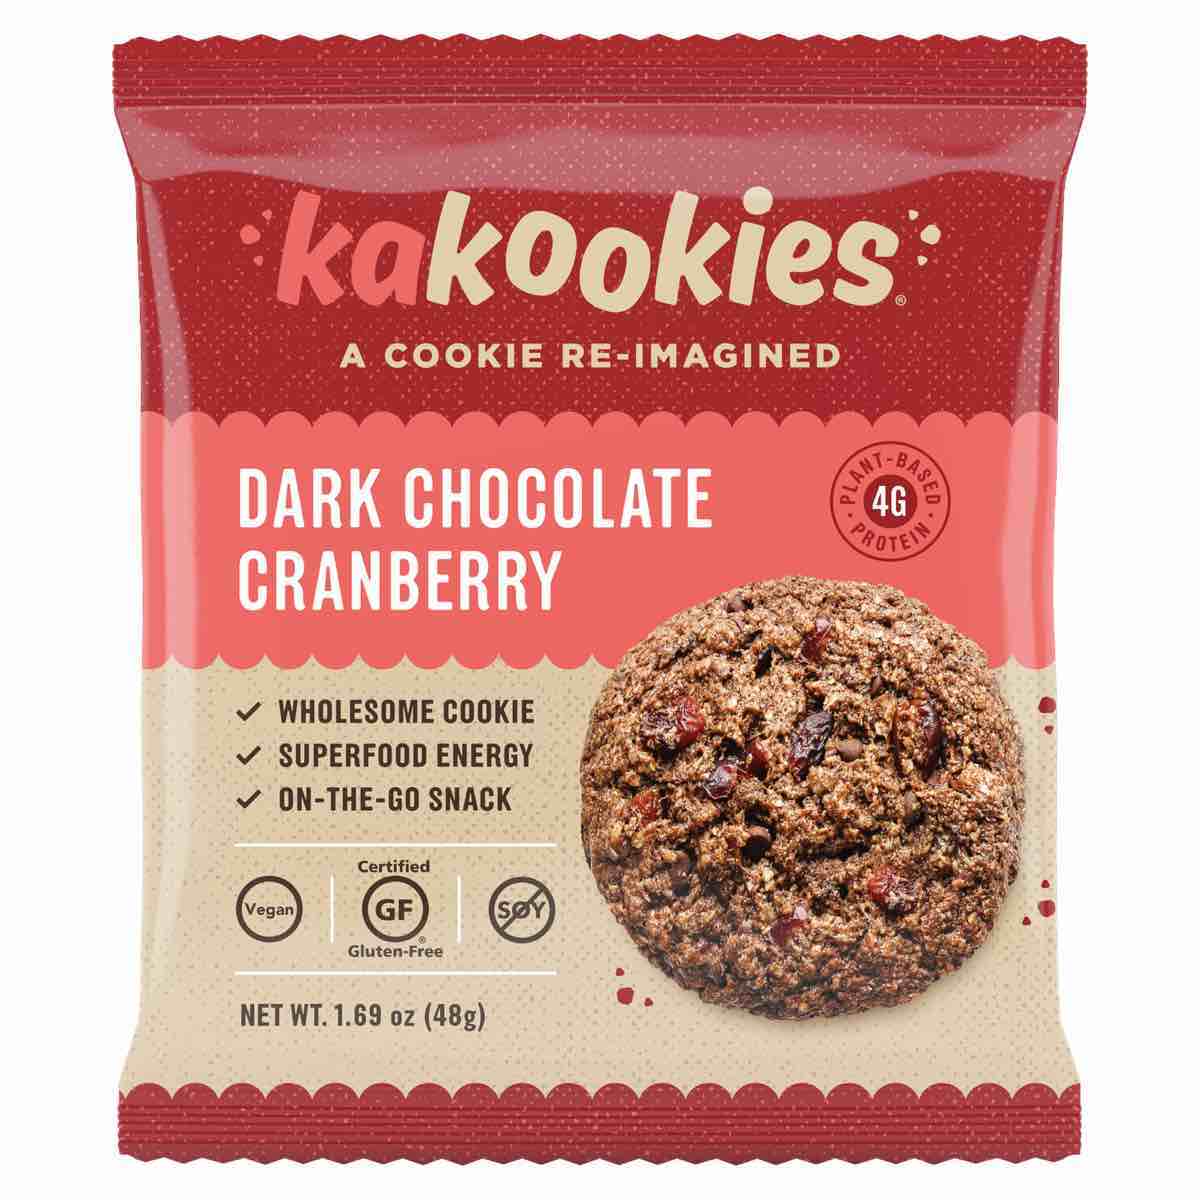 Dark Chocolate Cranberry energy cookies